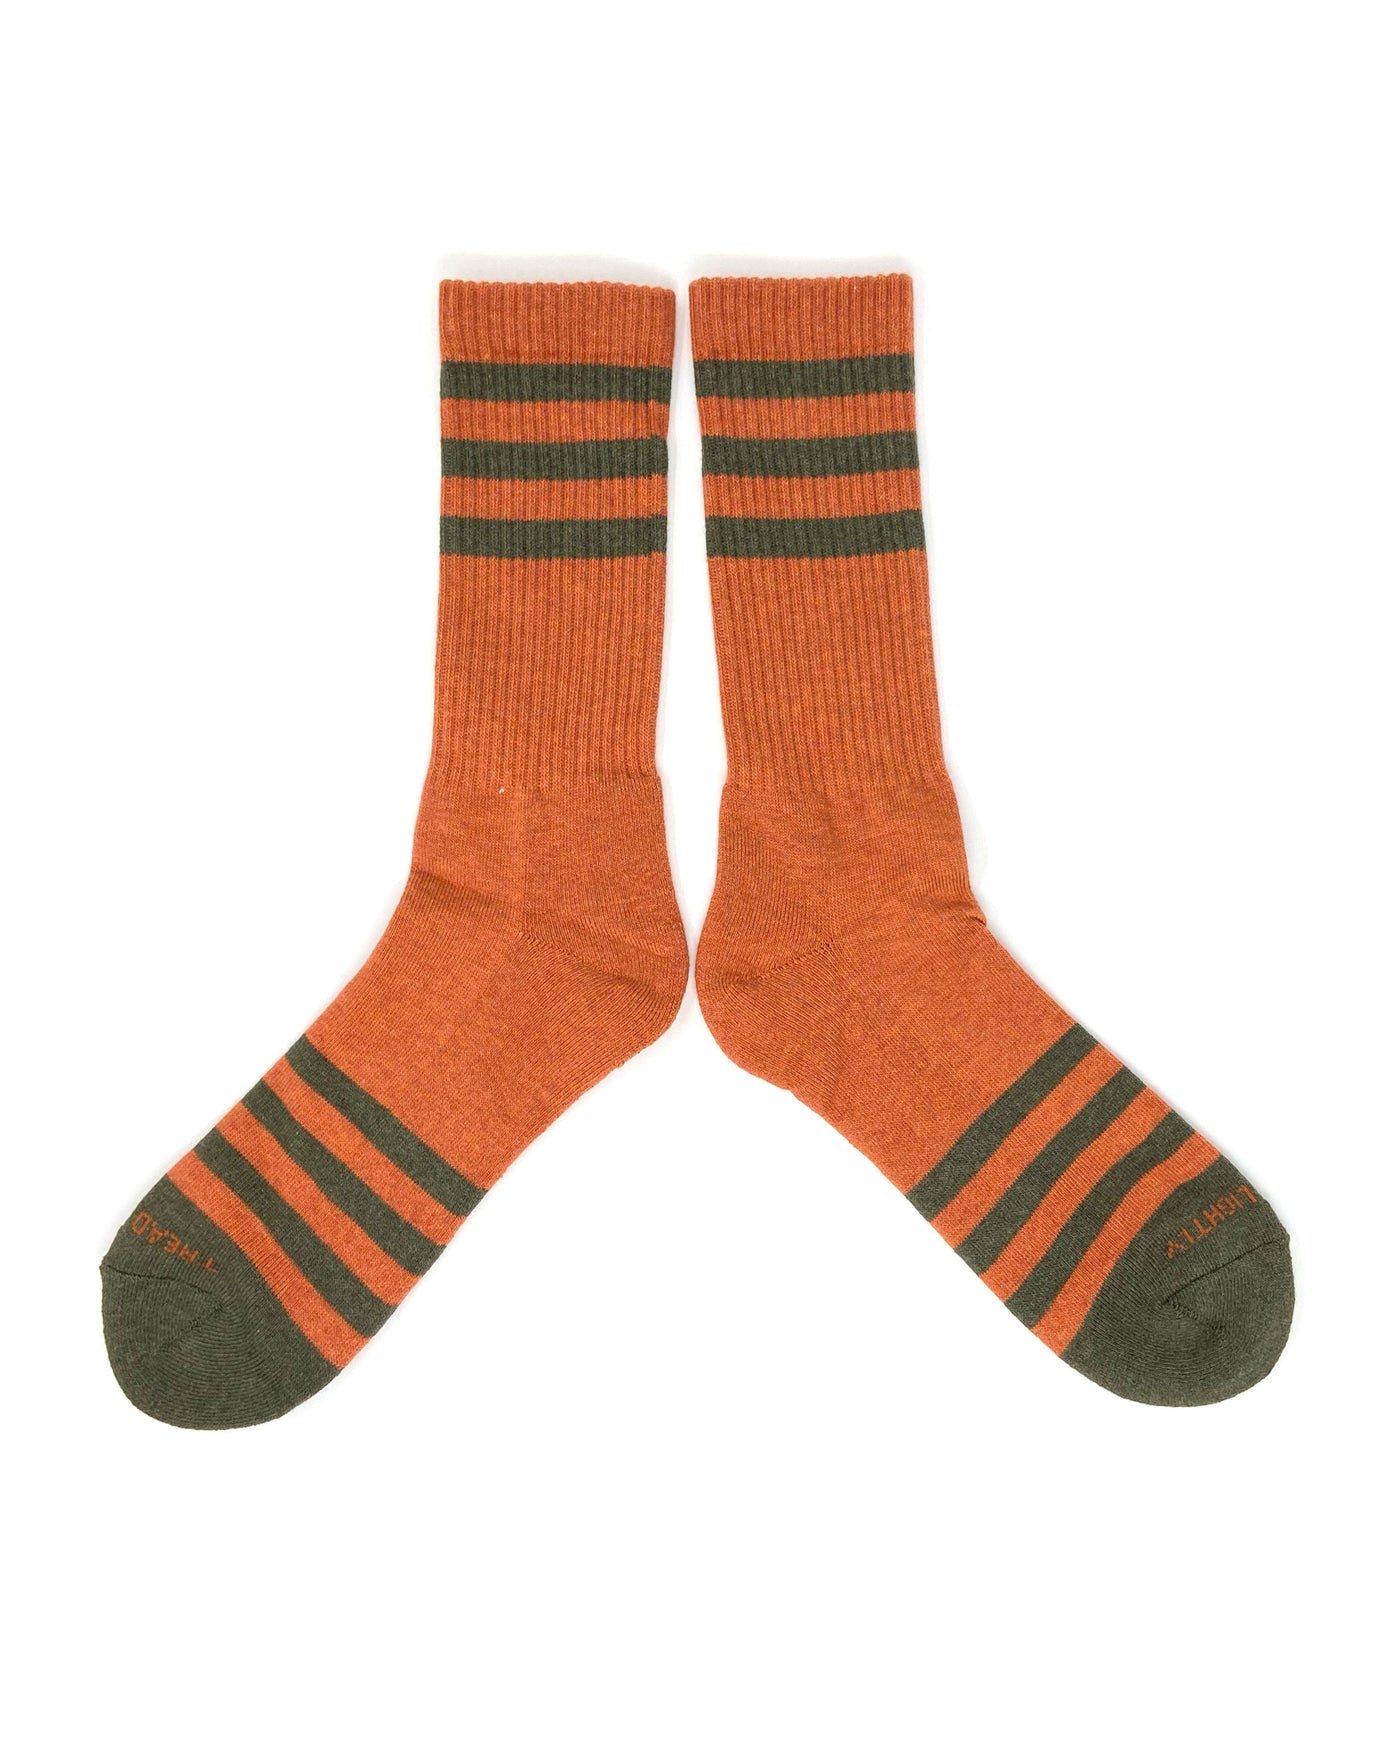 T.A.C Socks Heather Stripes - Orange/Olive